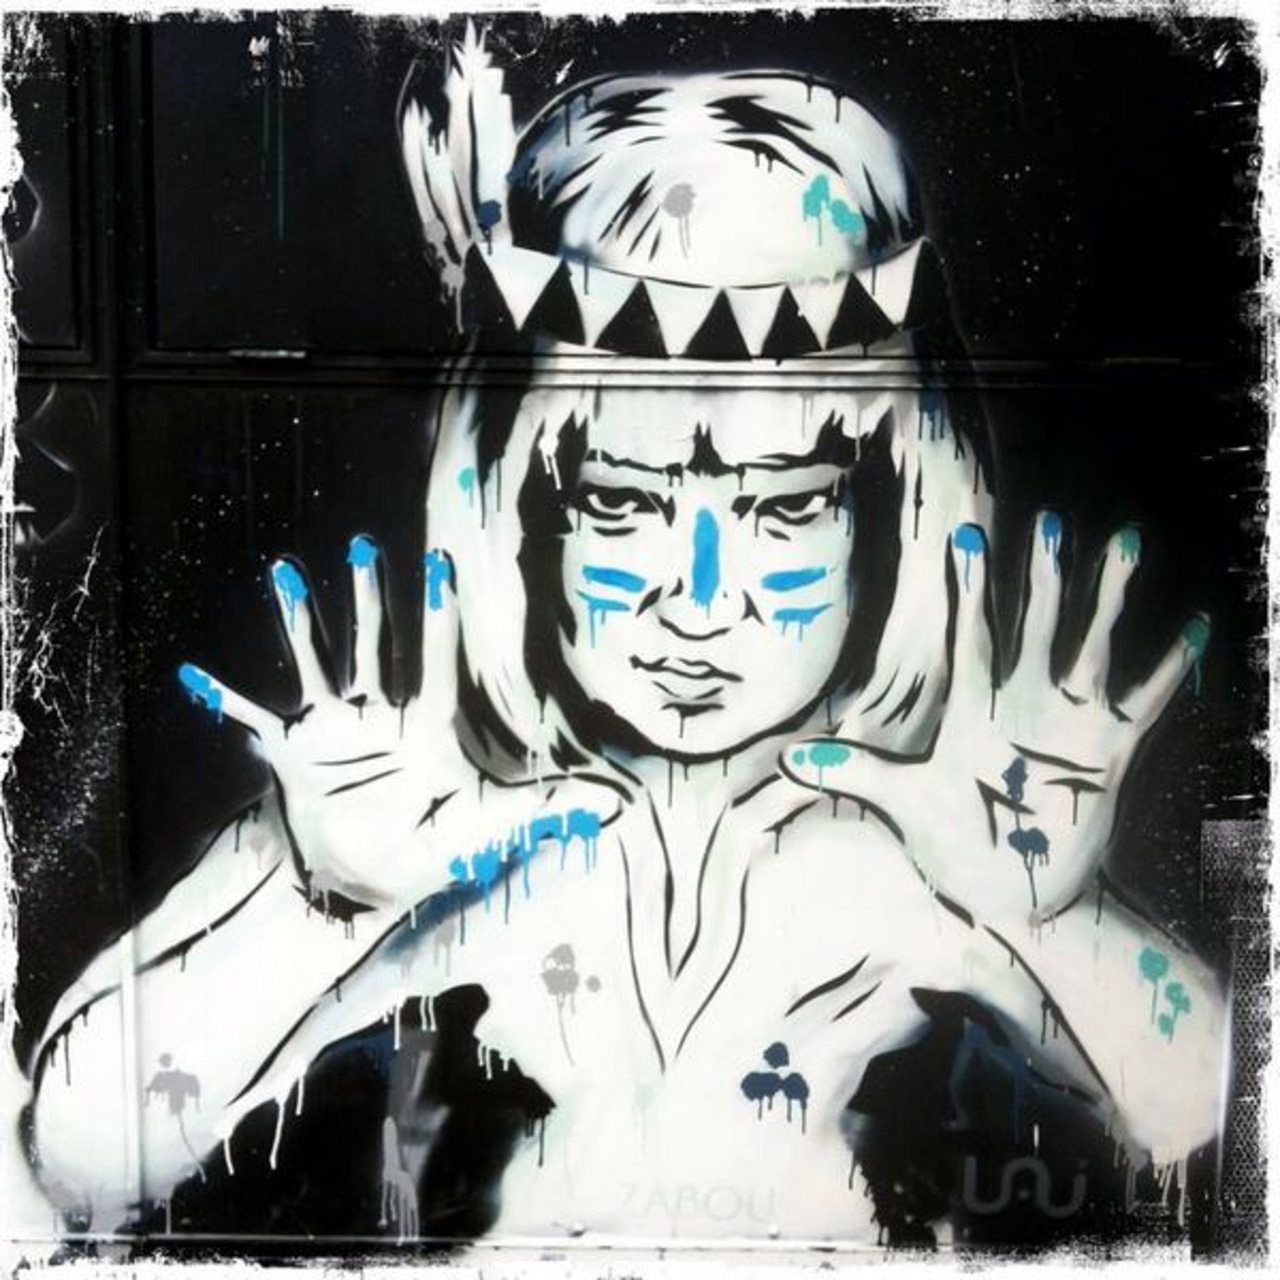 RT @EastsideLondon: Great art for everyone on Hackney Road!

#art #streetart #graffiti #design #hackney #london http://t.co/gMcqGdQiwg